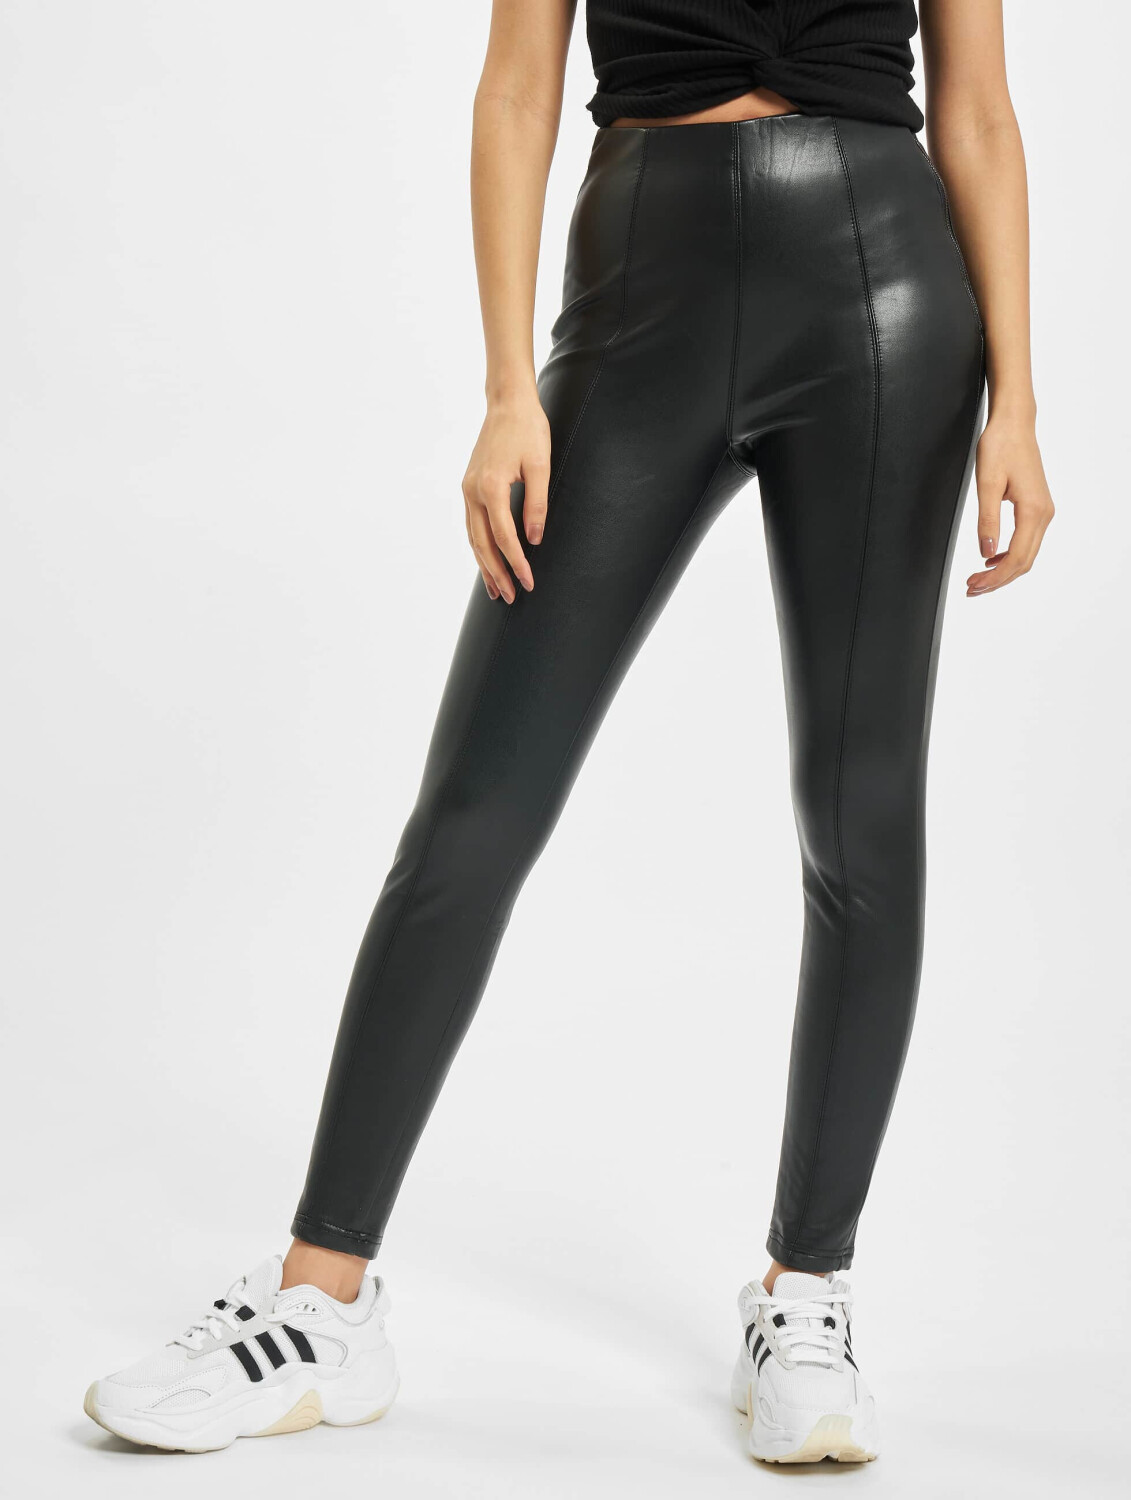 Urban Classics Ladies Faux Leather Skinny Pants (TB3238) black ab 28,03 € |  Preisvergleich bei